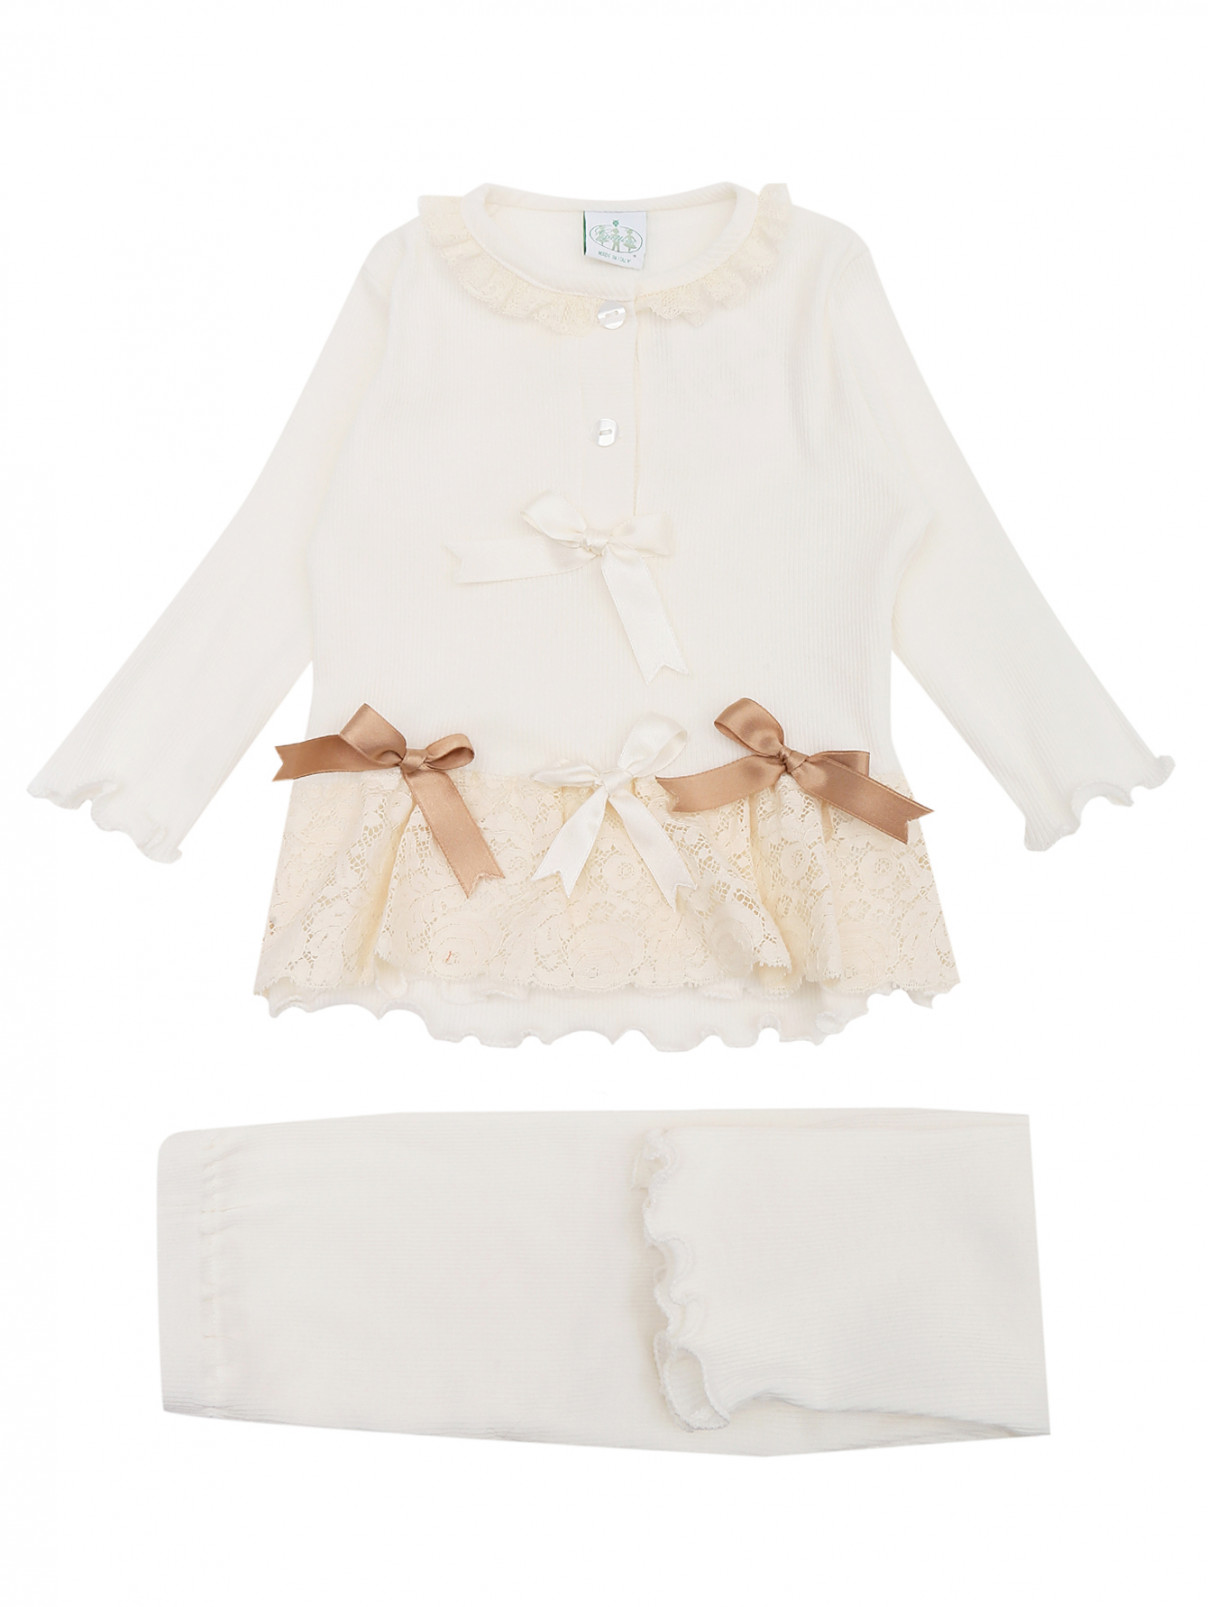 Пижама из фактурного хлопка с оборками Giottino  –  Общий вид  – Цвет:  Белый